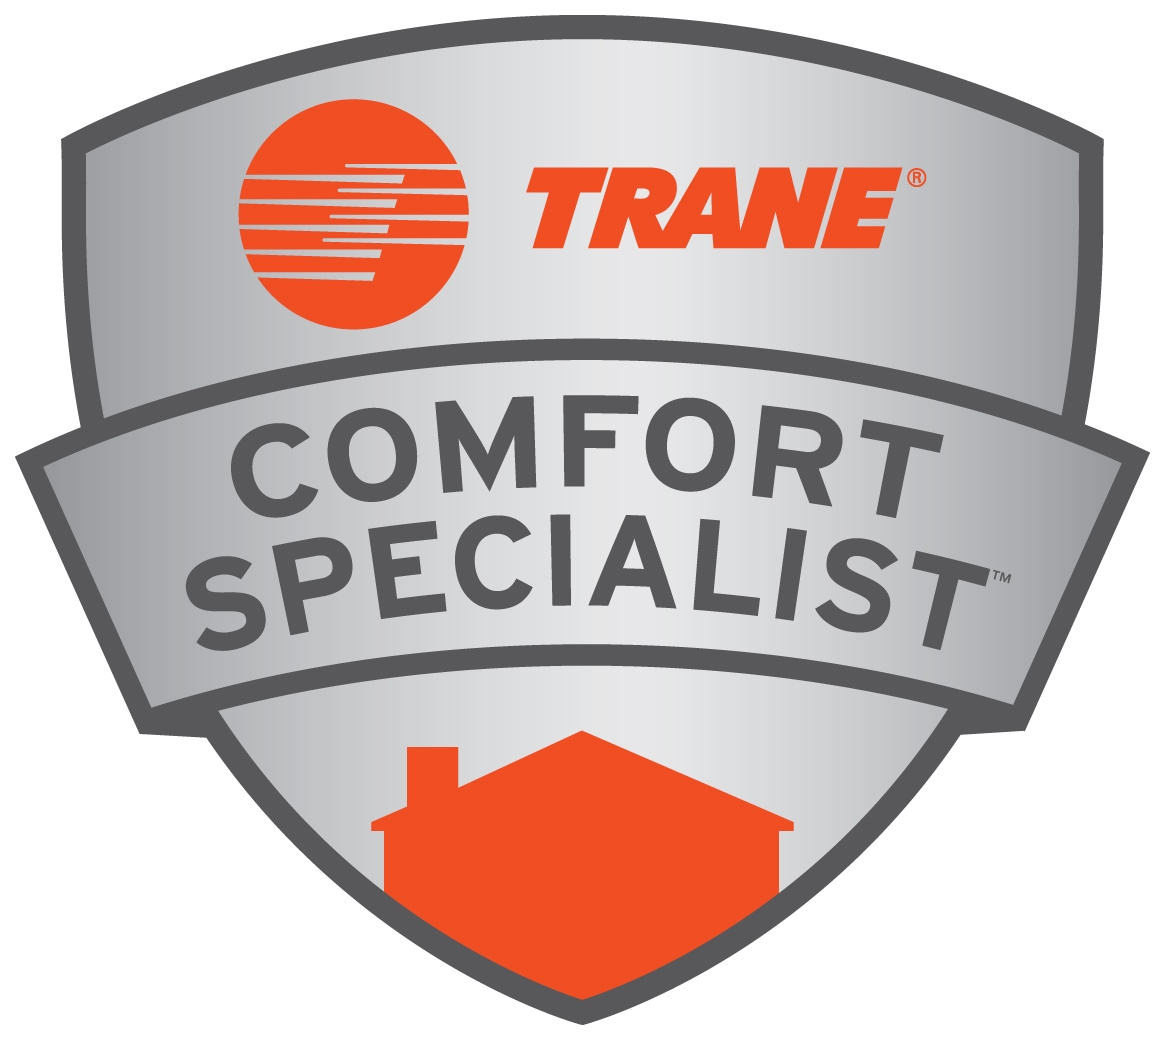 Look for Trane Comfort Specialist™ dealers